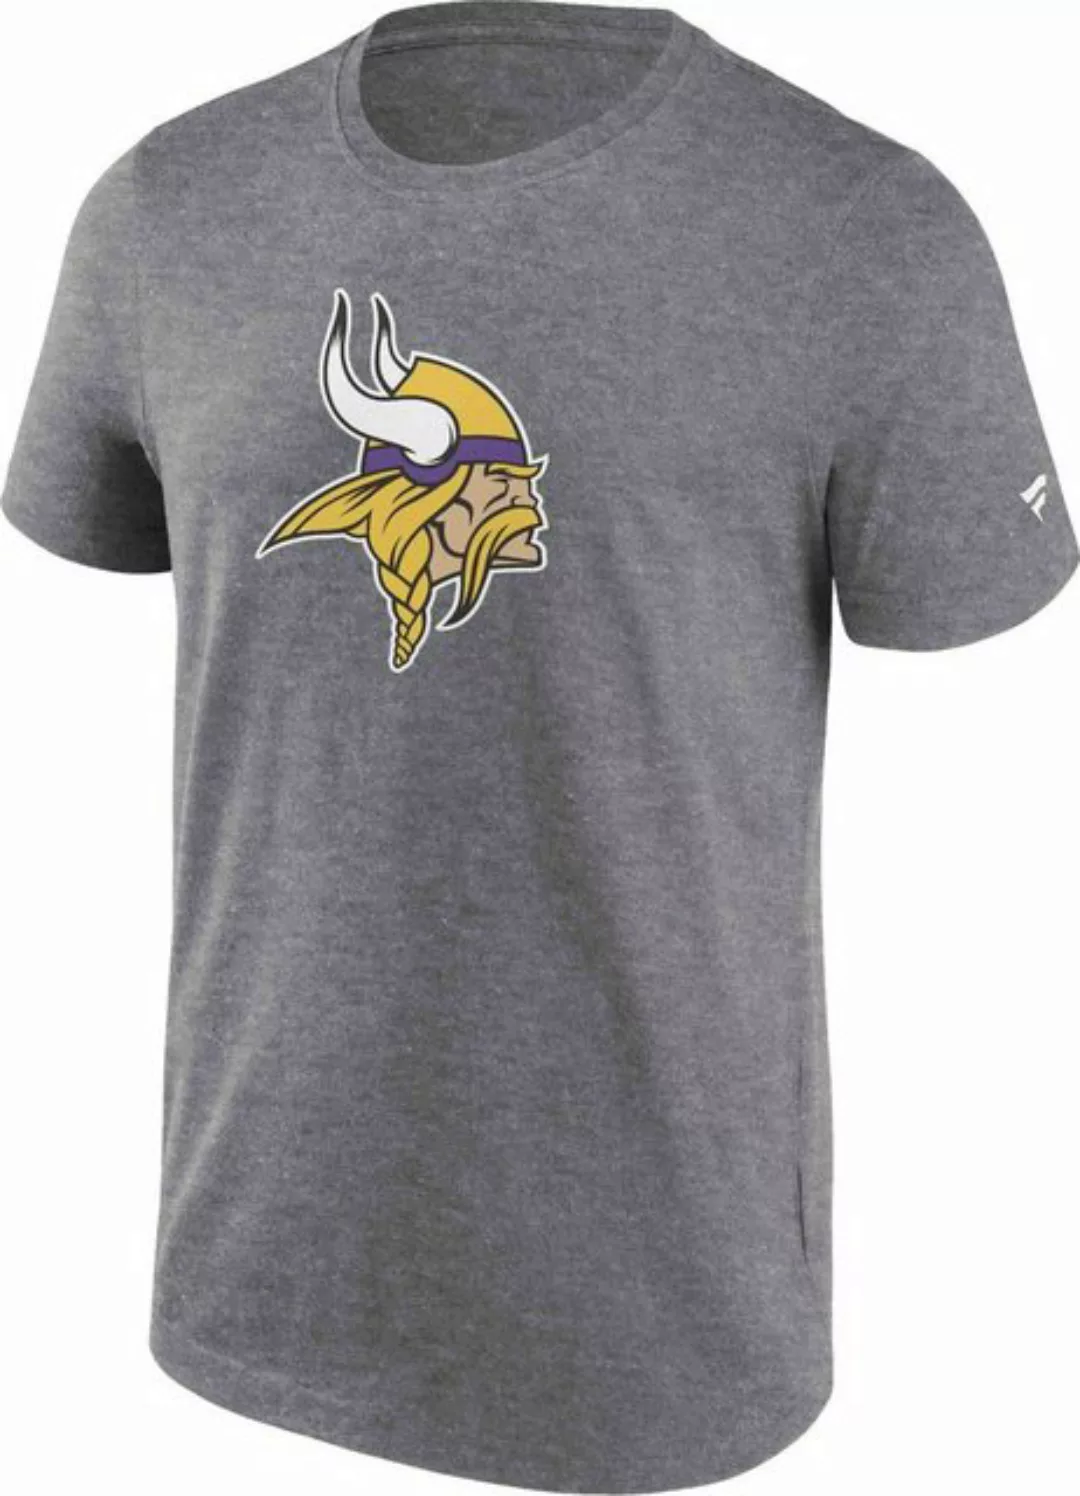 Fanatics T-Shirt NFL Minnesota Vikings Primary Logo Graphic günstig online kaufen